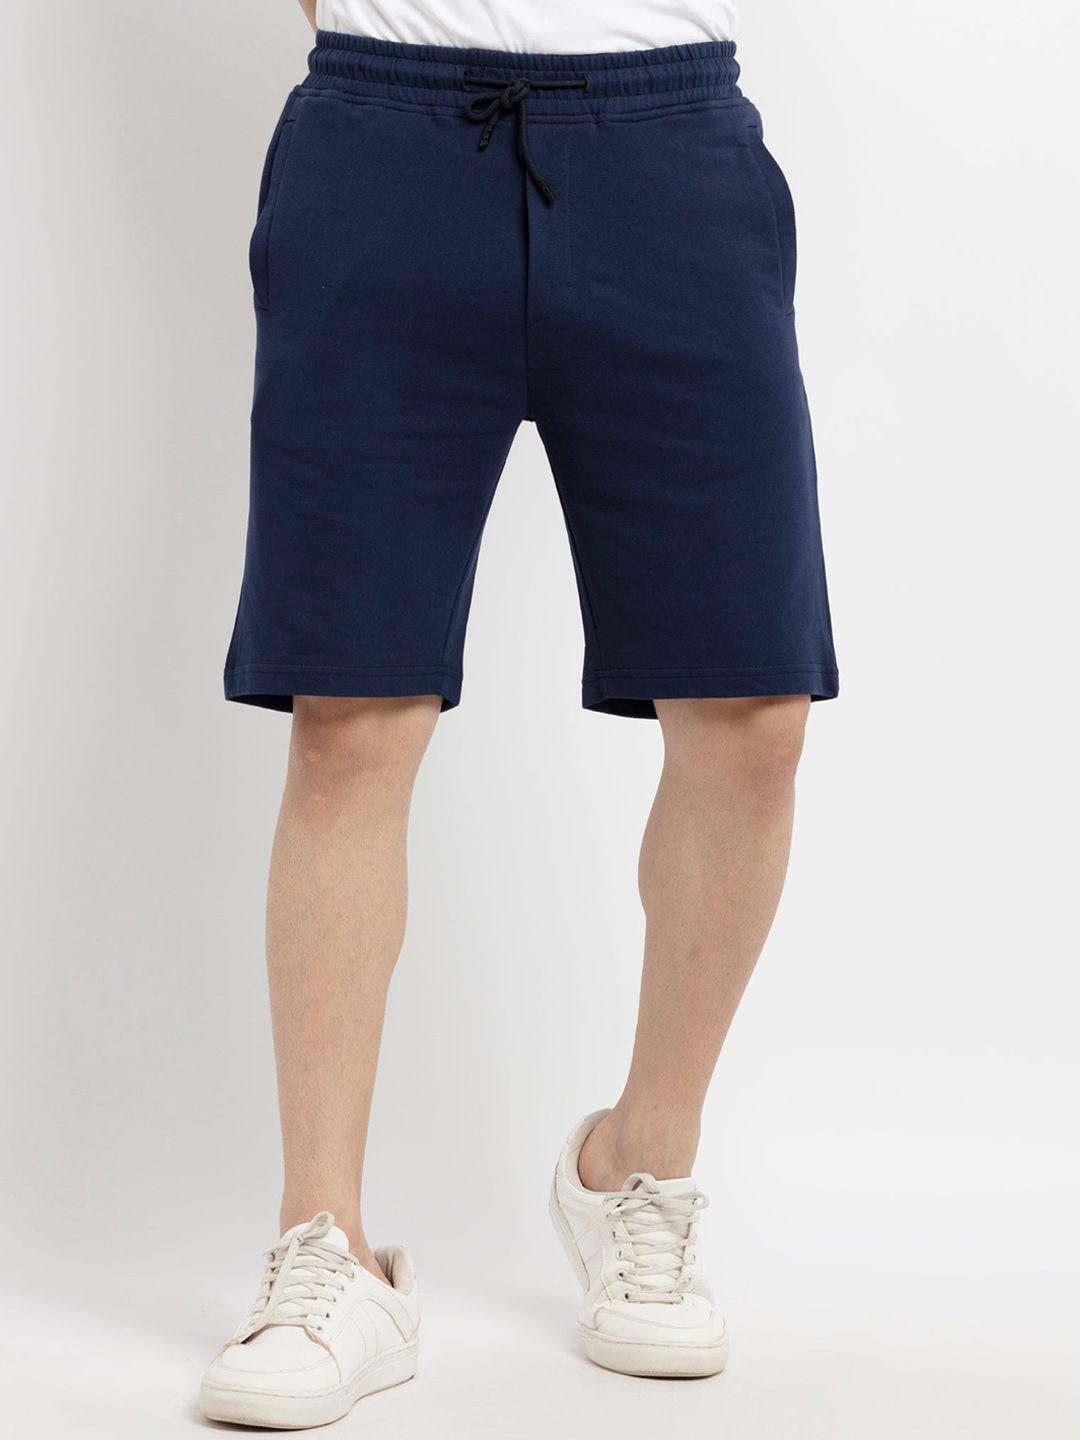 status quo men navy blue solid shorts